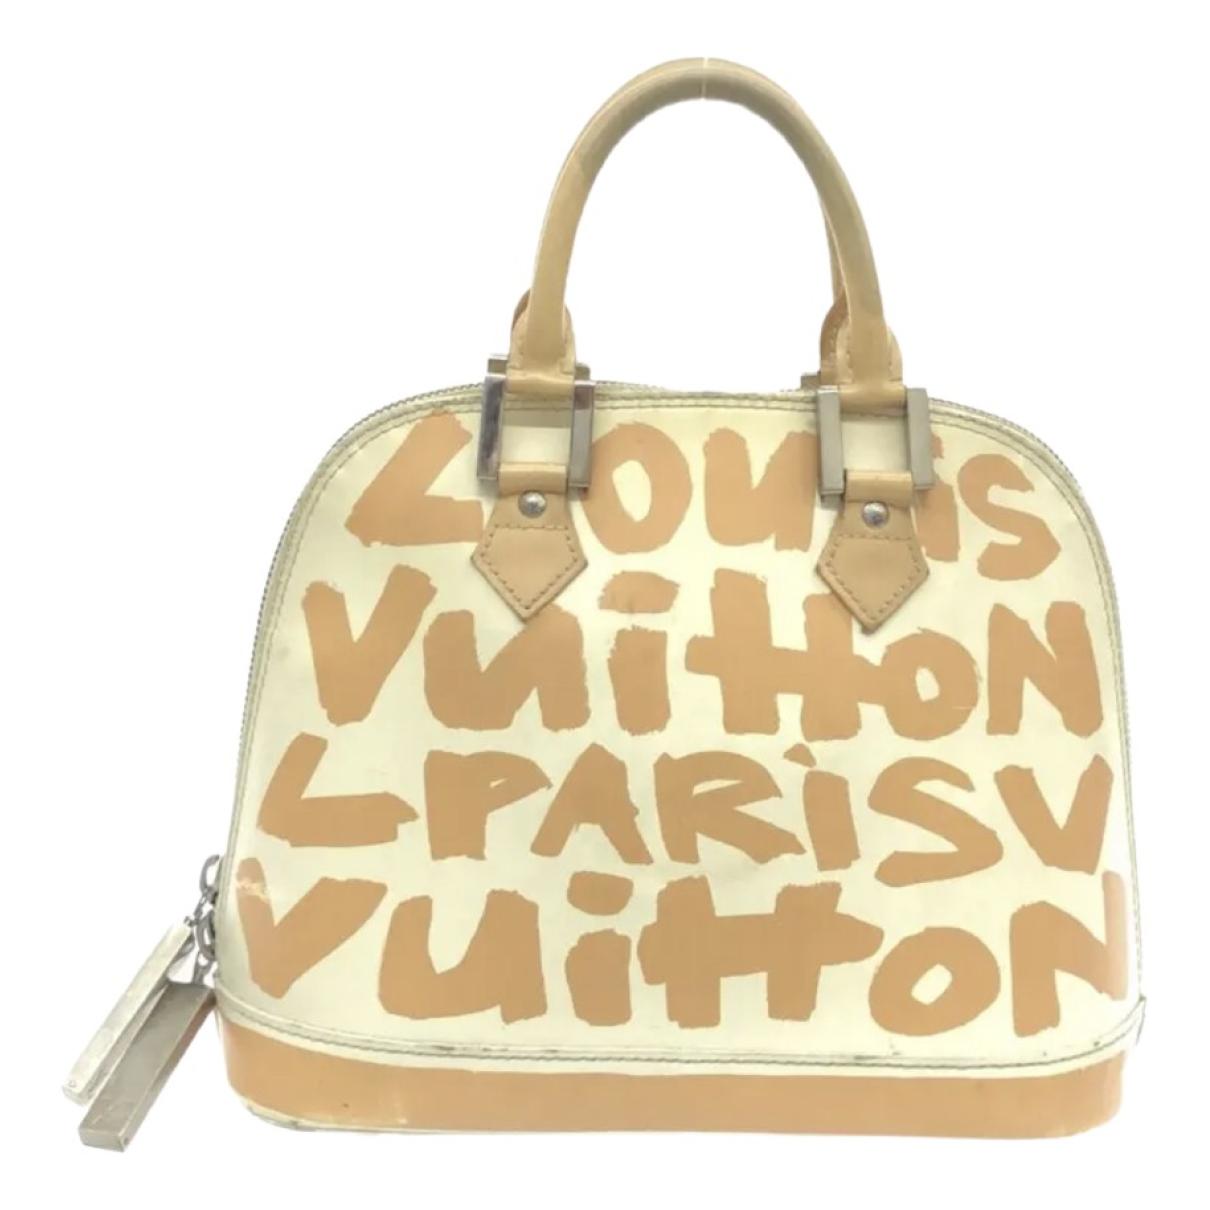 Alma Graffiti patent leather handbag